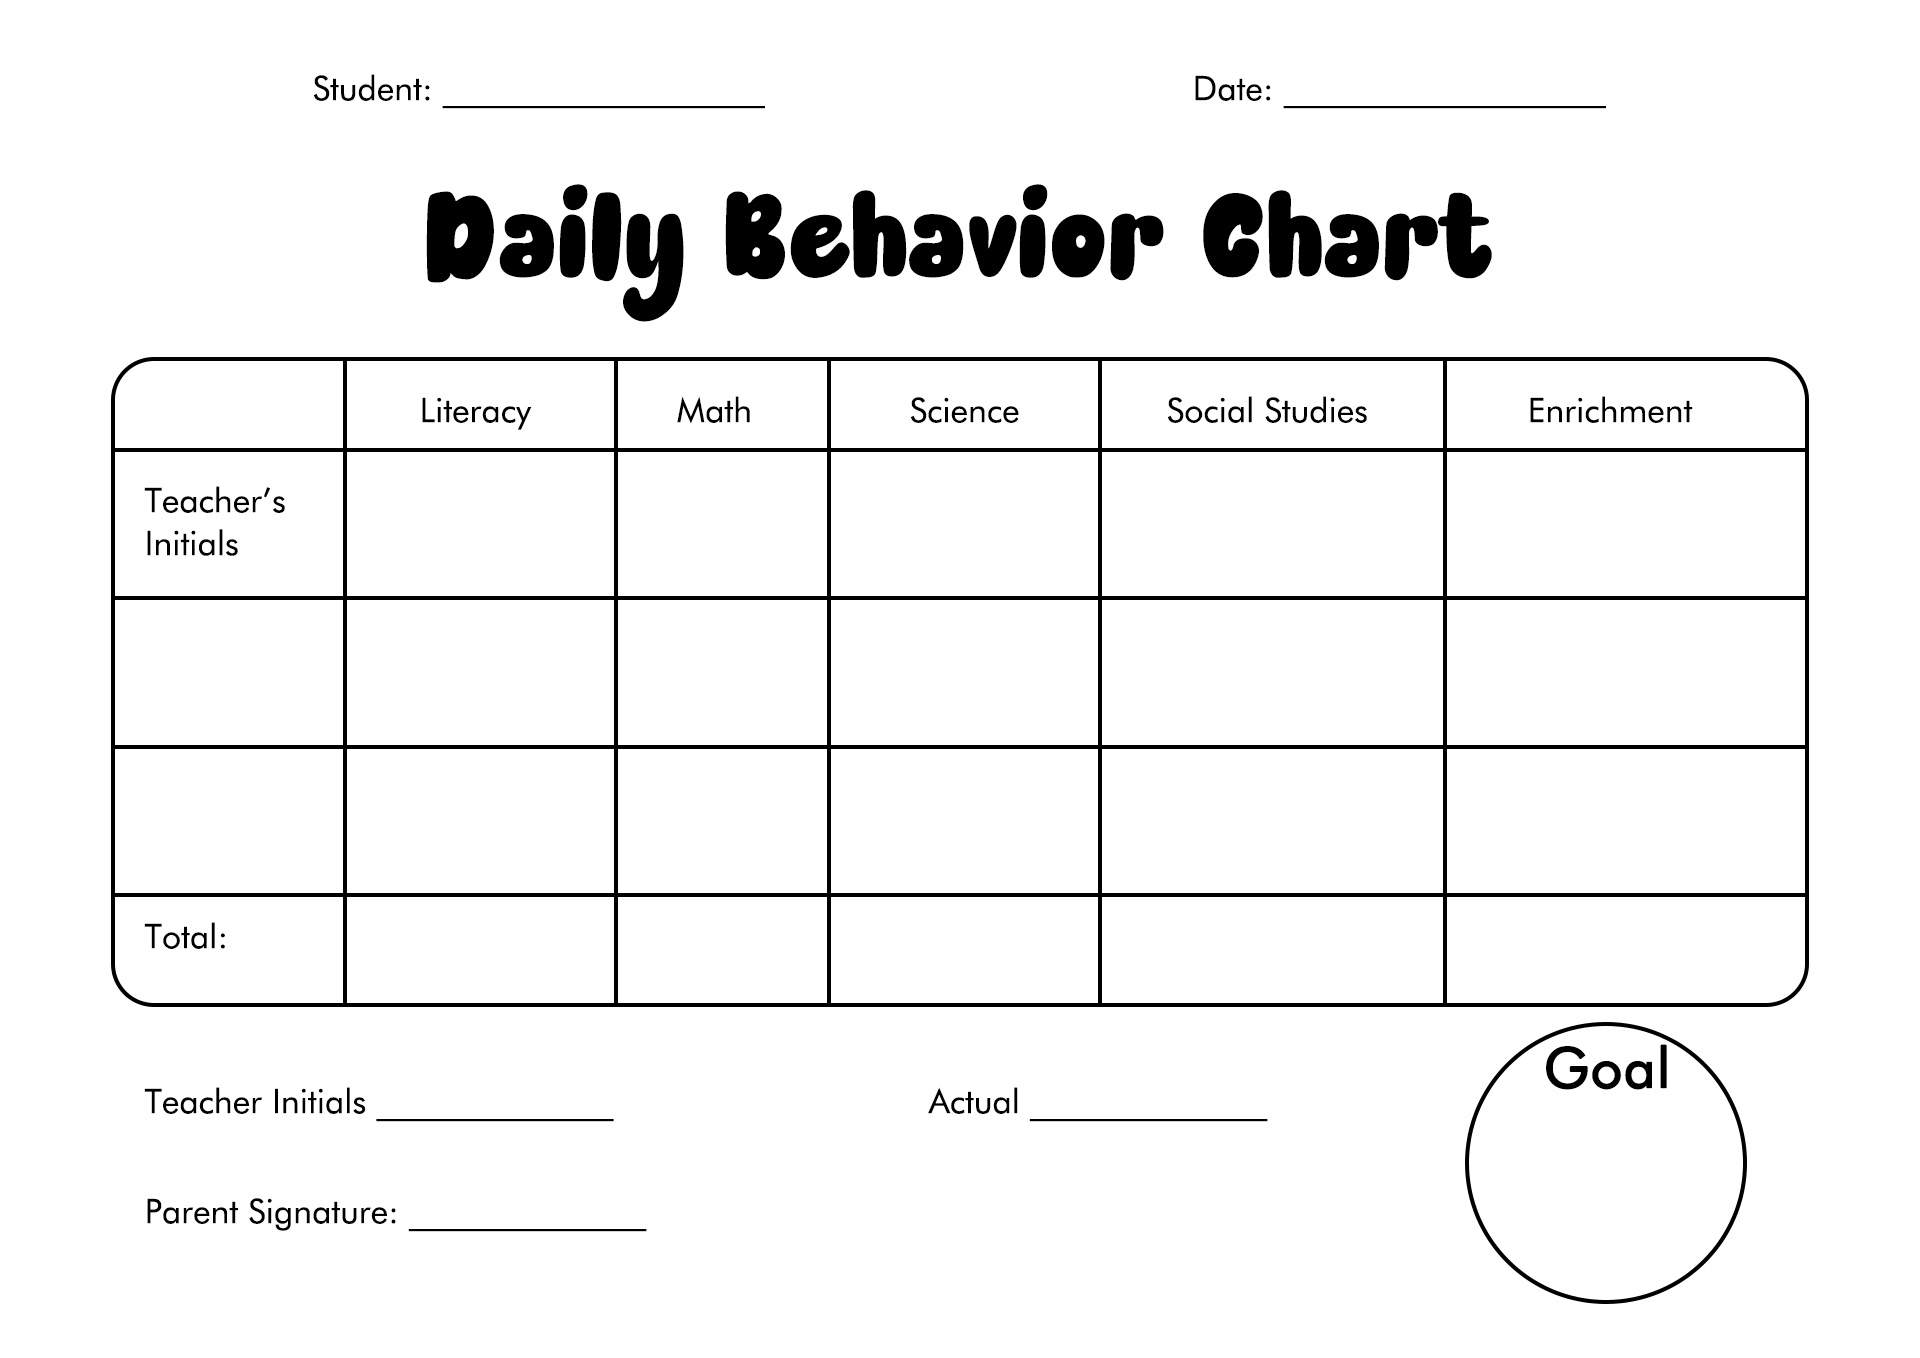 Daily Behavior Chart Image